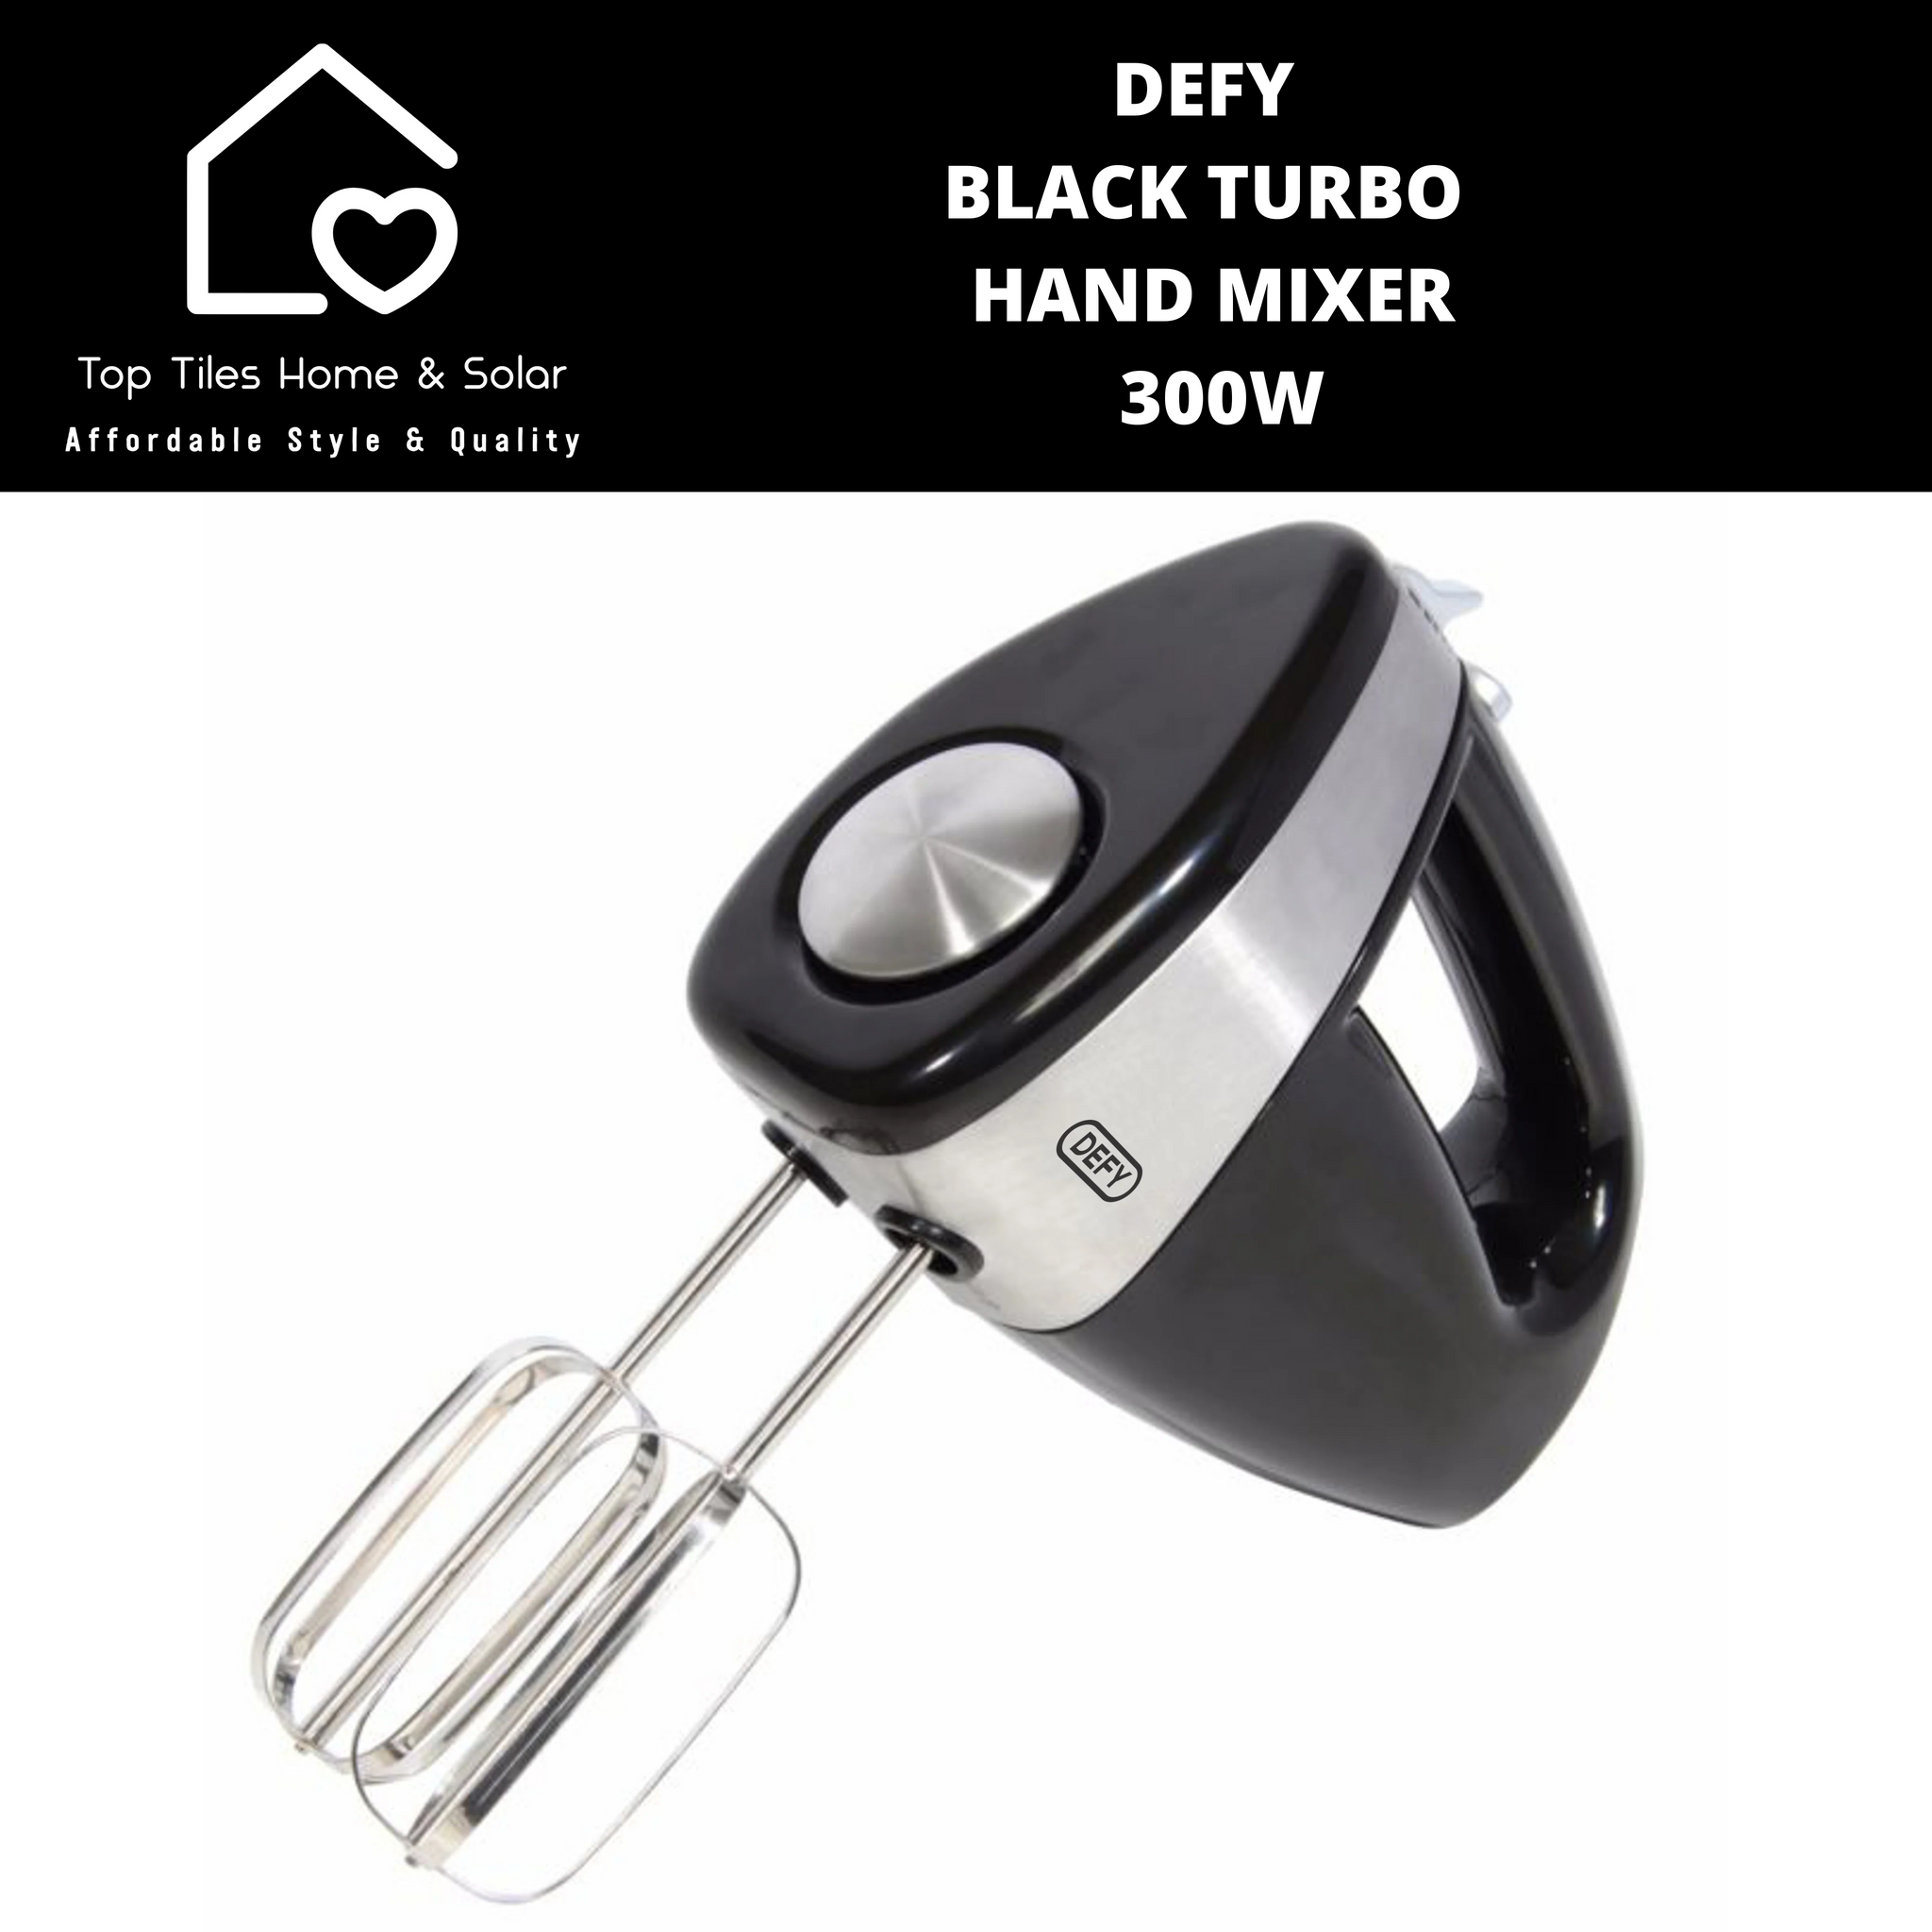 Home - Mixer Hand Defy 300W Turbo – Black HM5040B Solar & Top Tiles